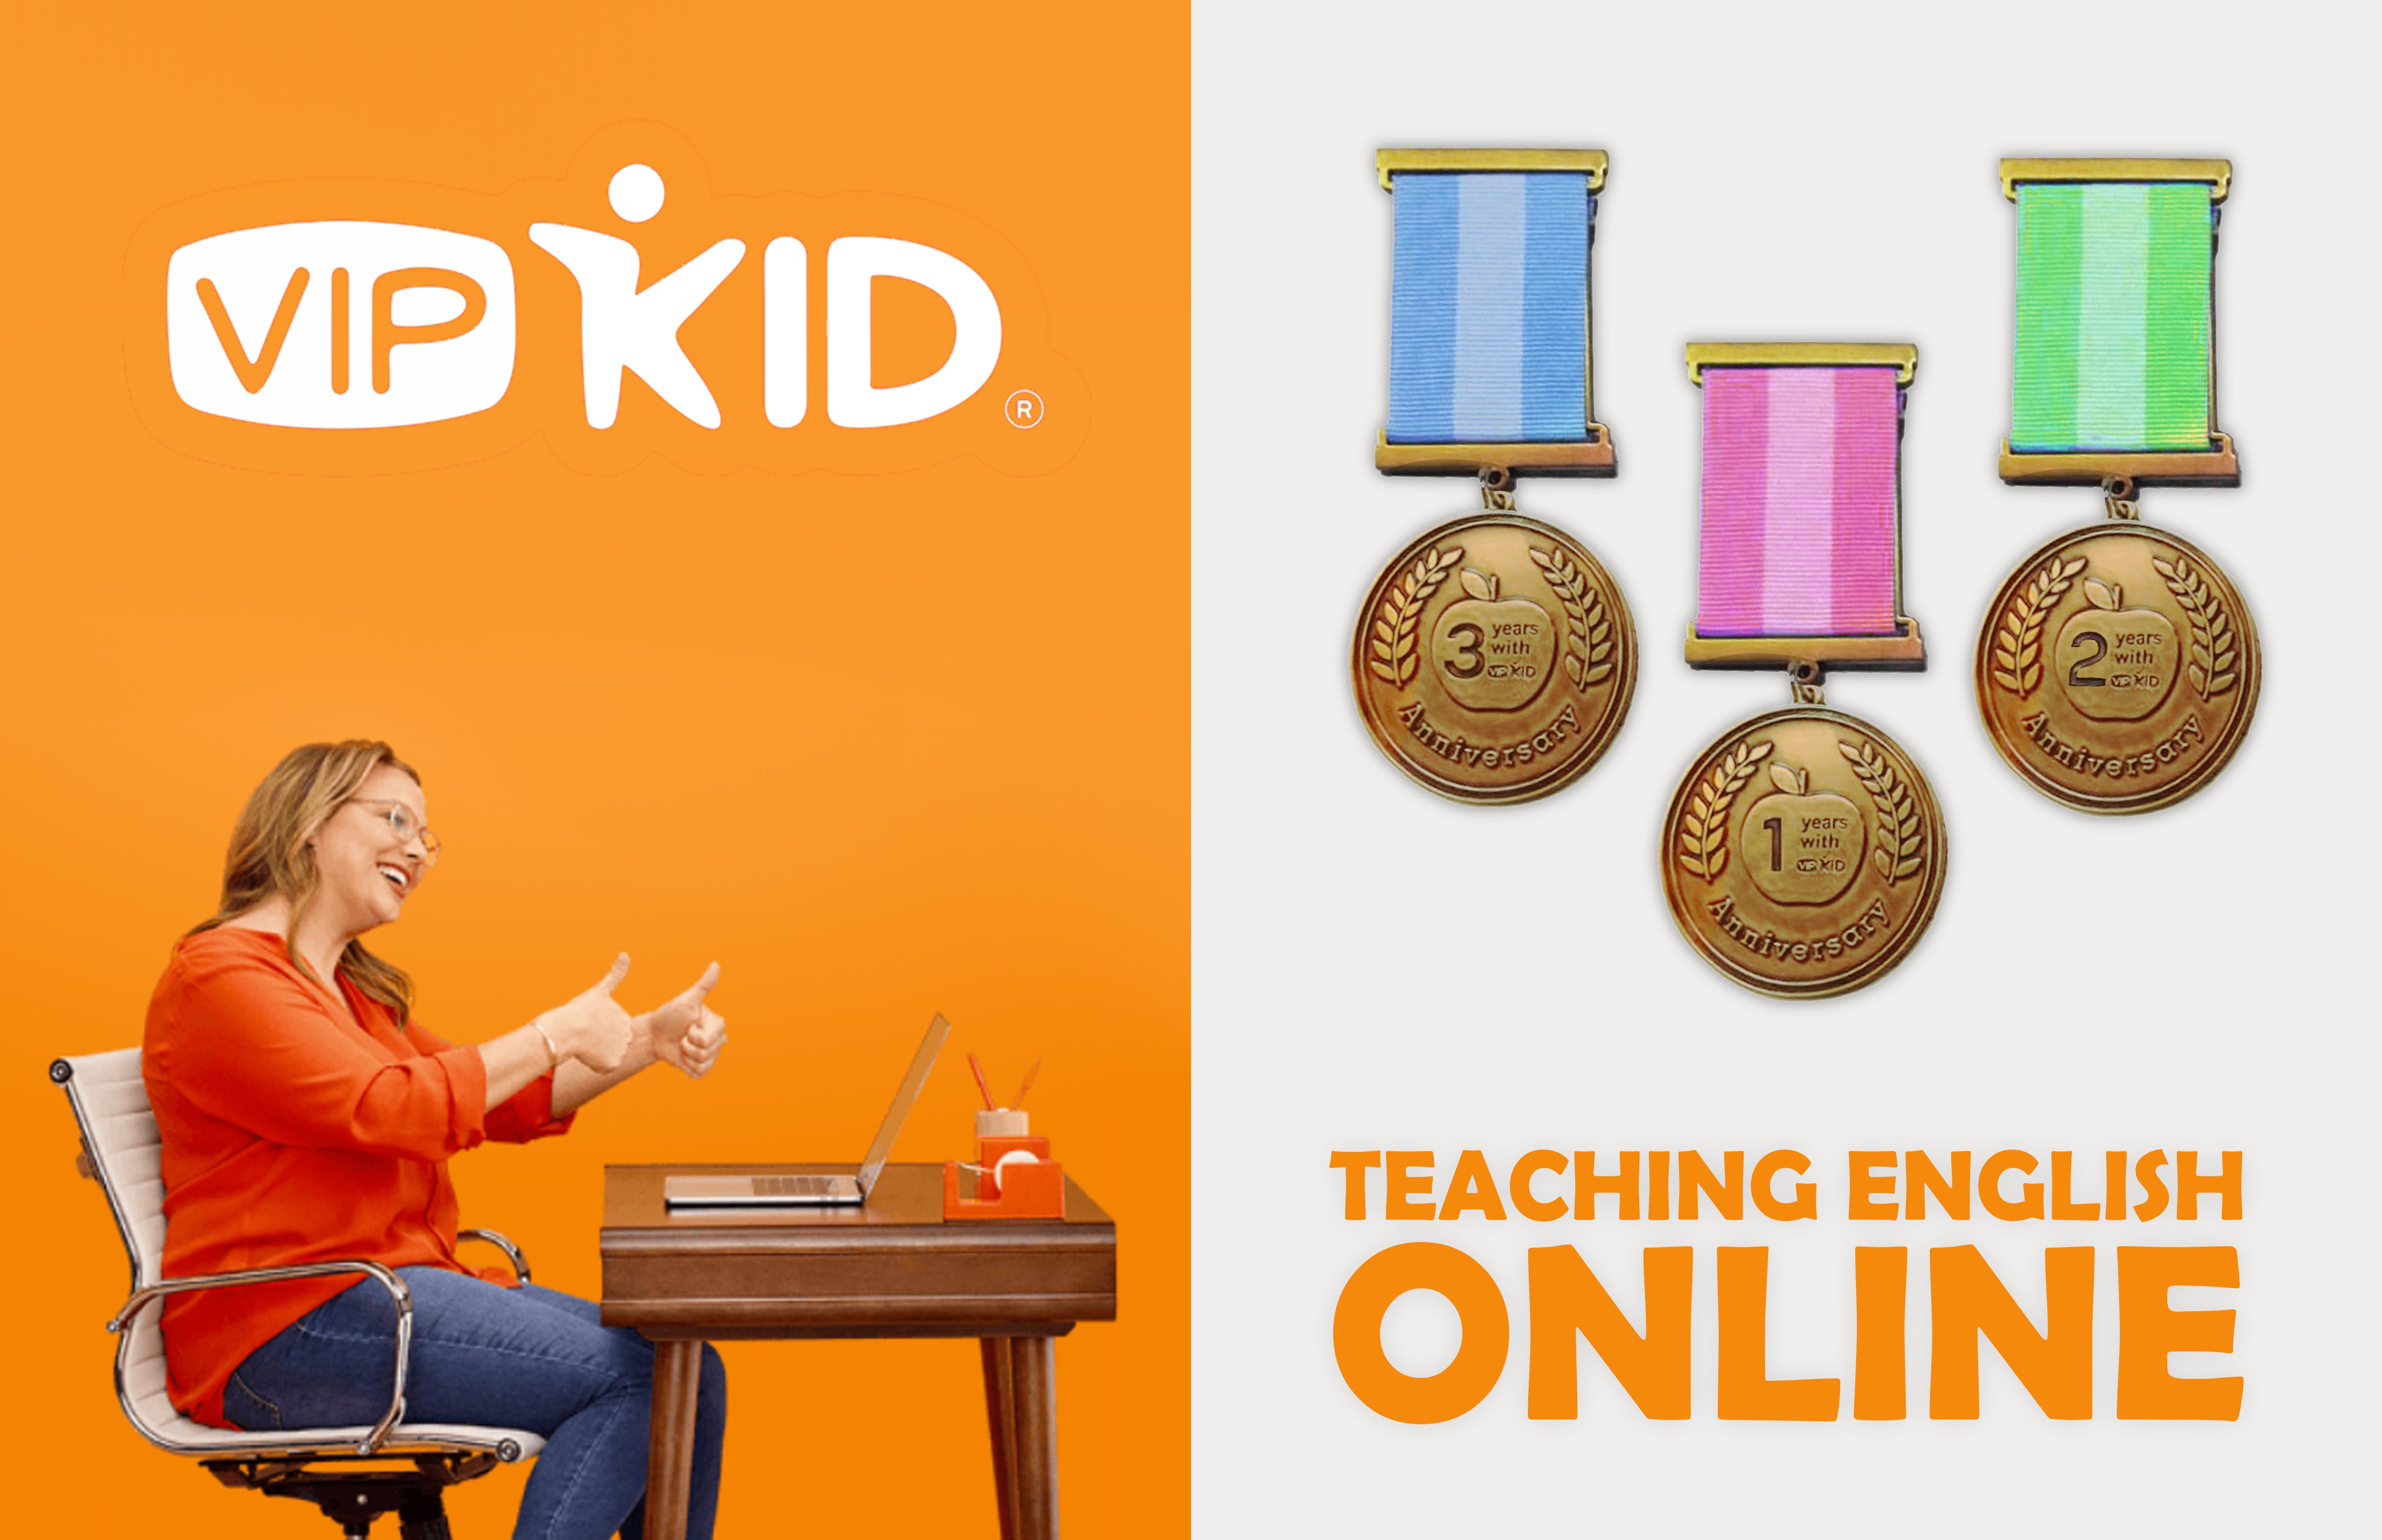 Online Education Platform - VIPKid